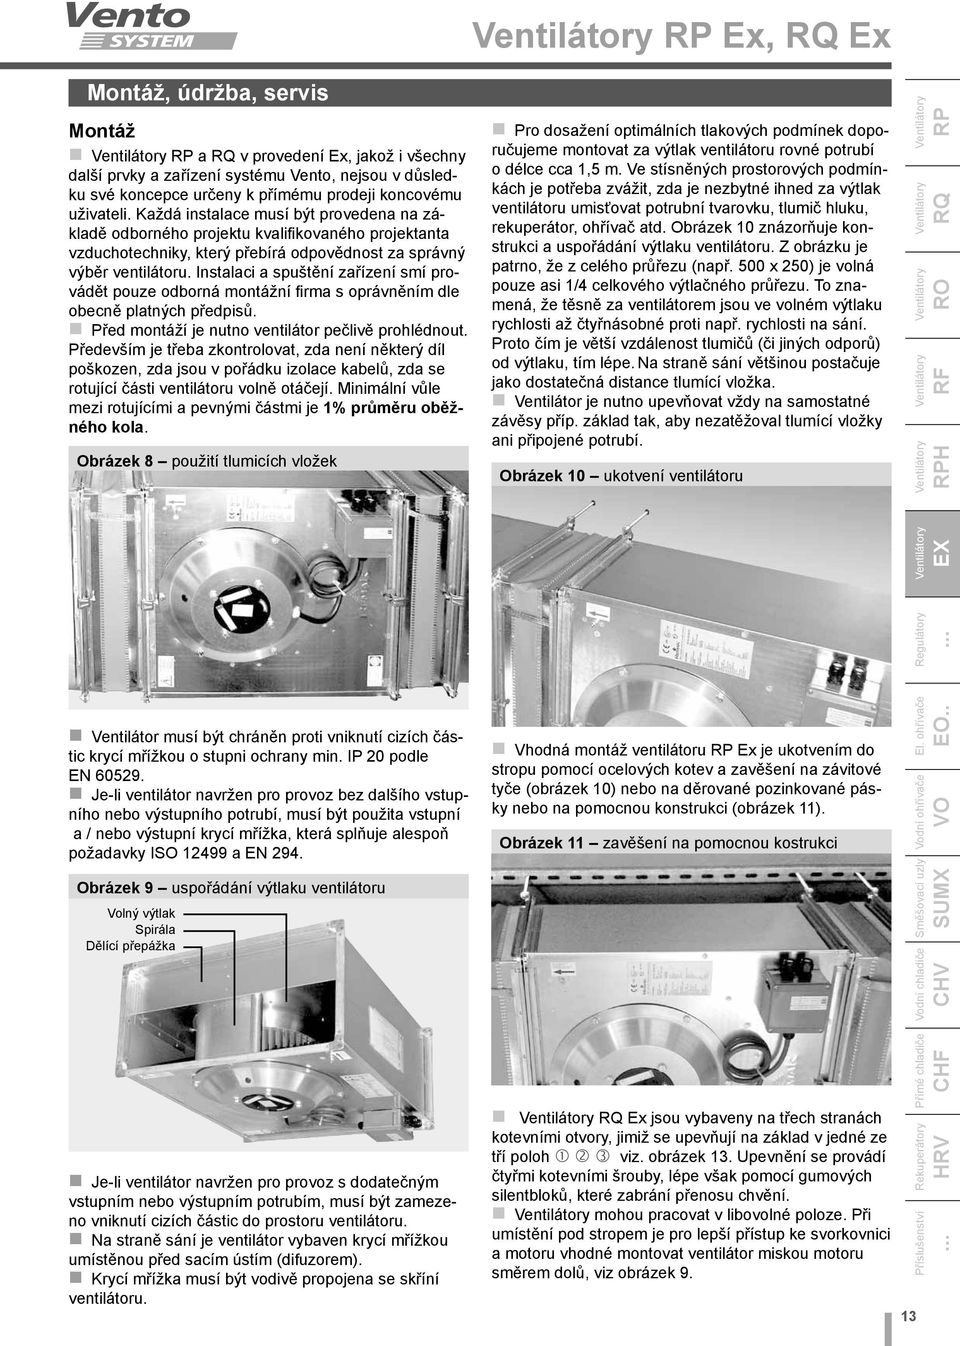 Radiální ventilátory RP a RQ v provedení Ex - PDF Free Download